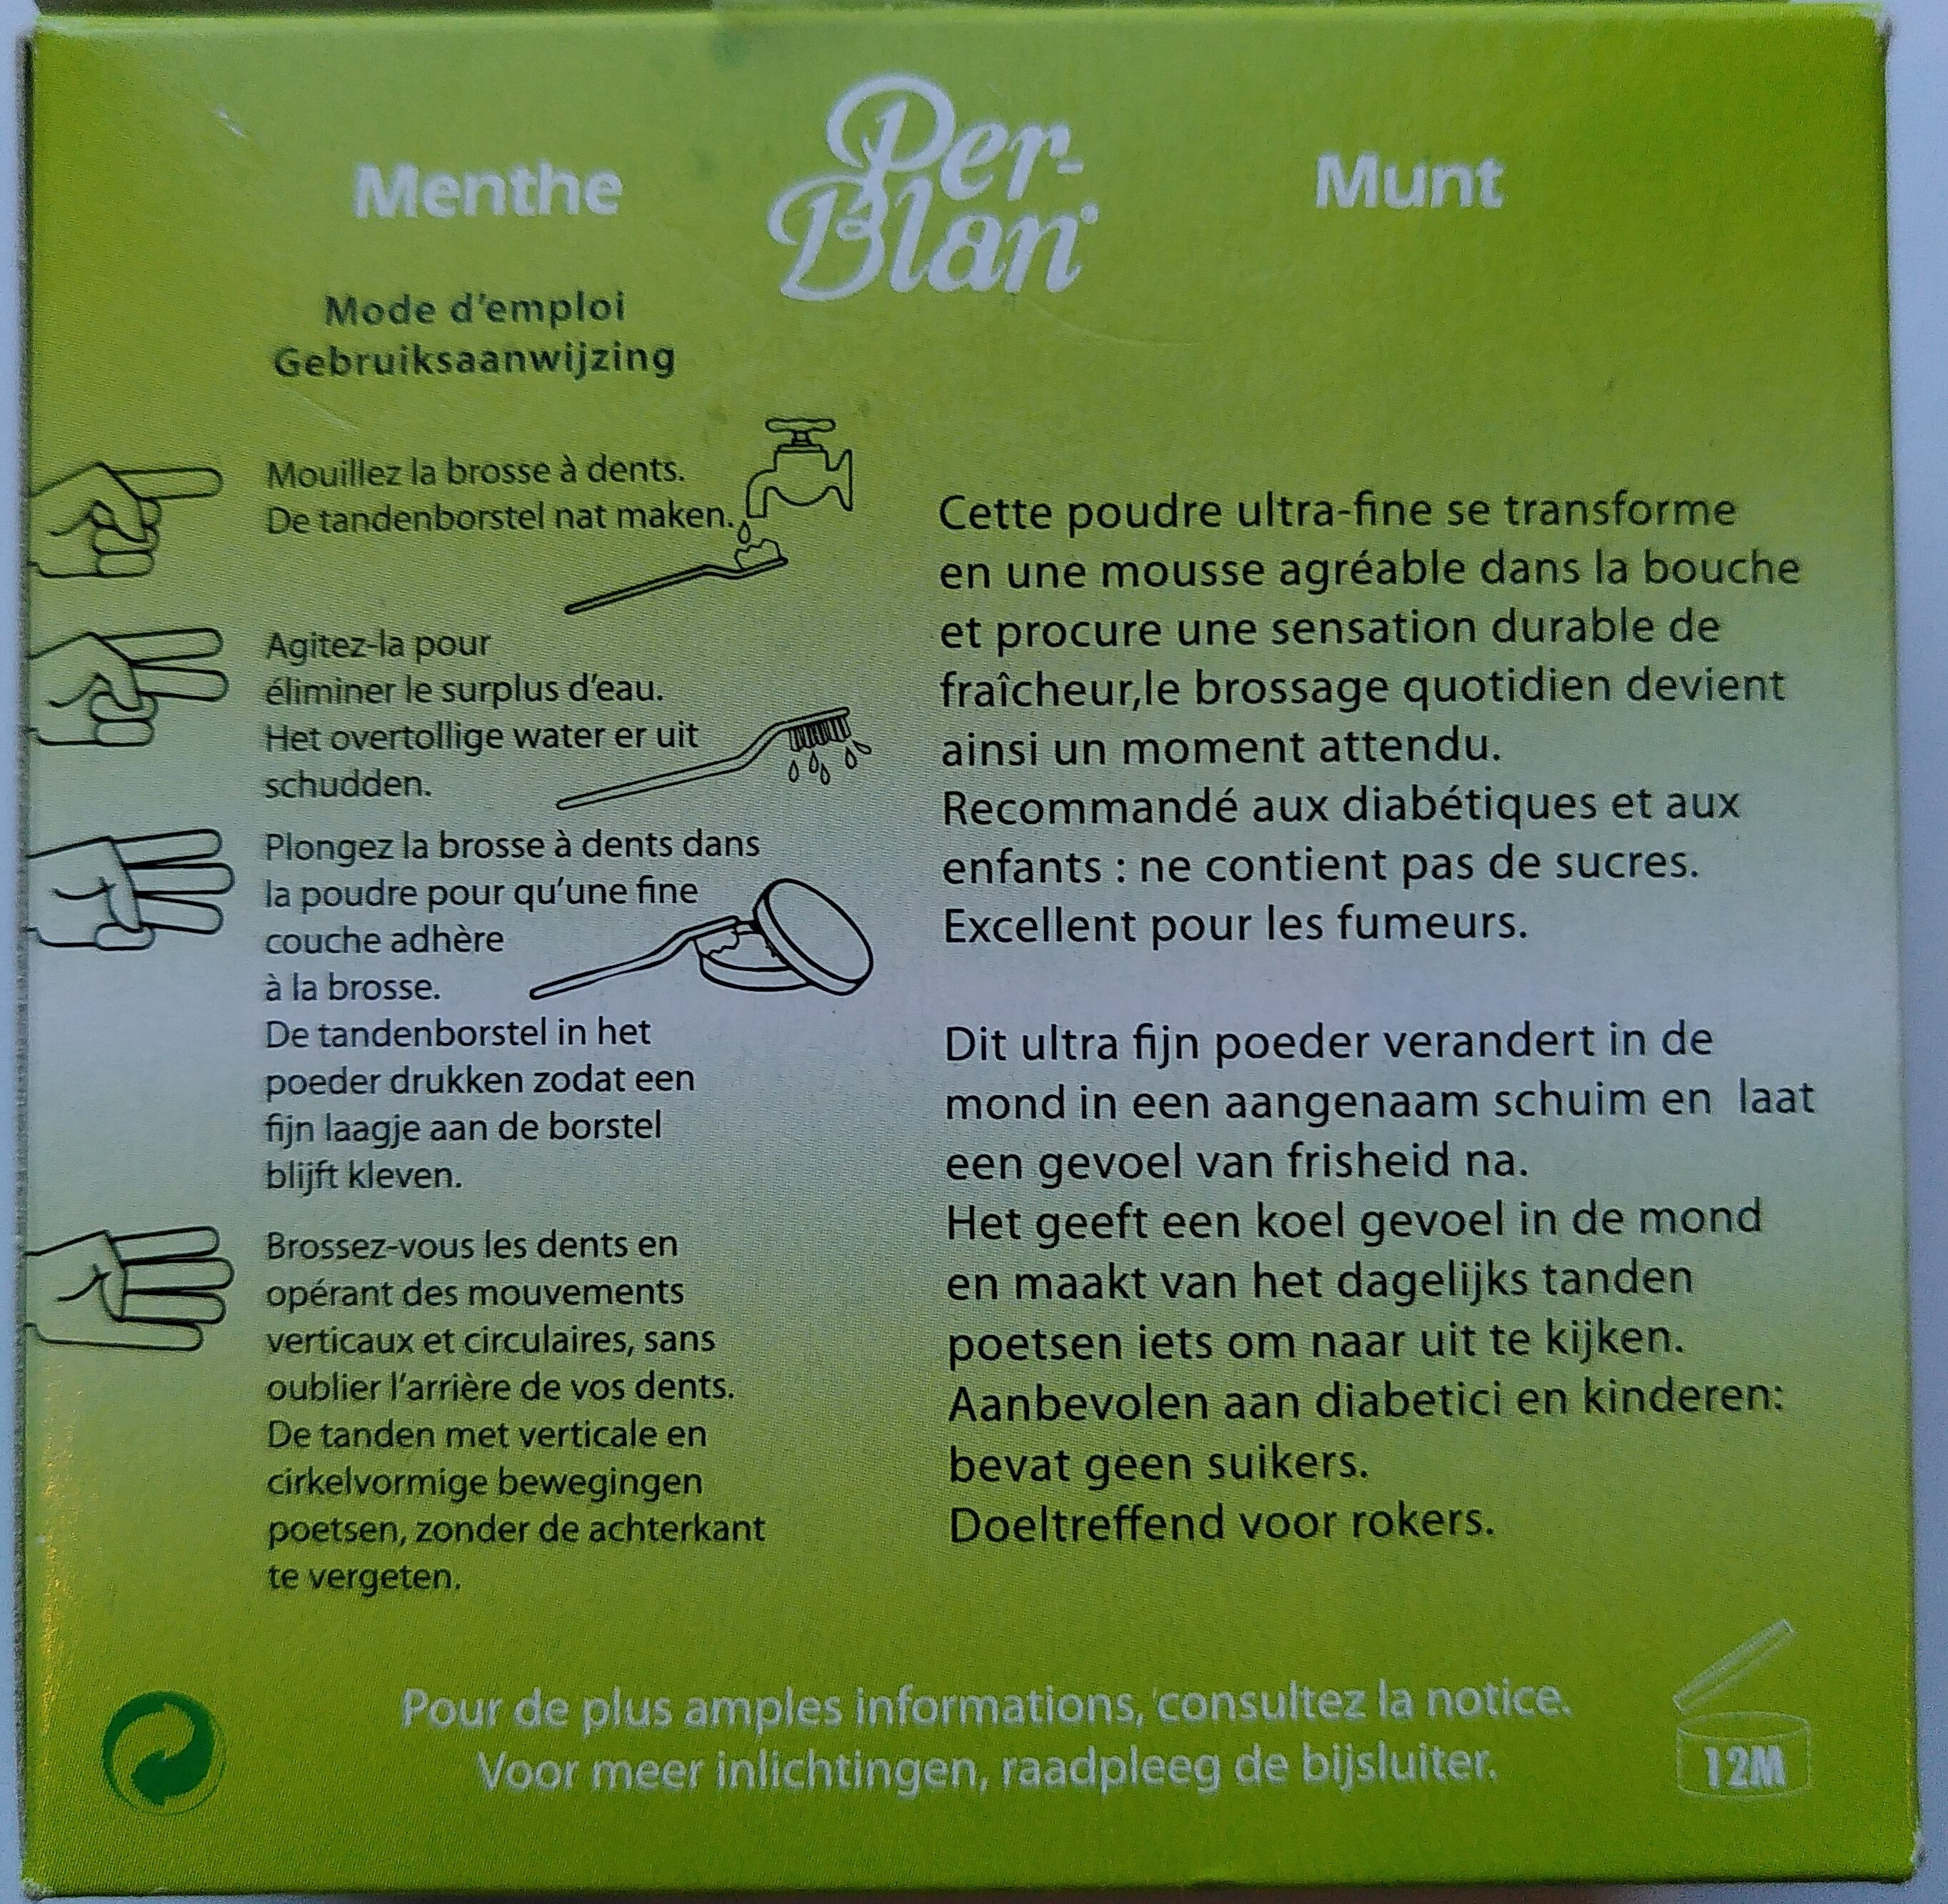 Per-Blan Menthe - Product - en